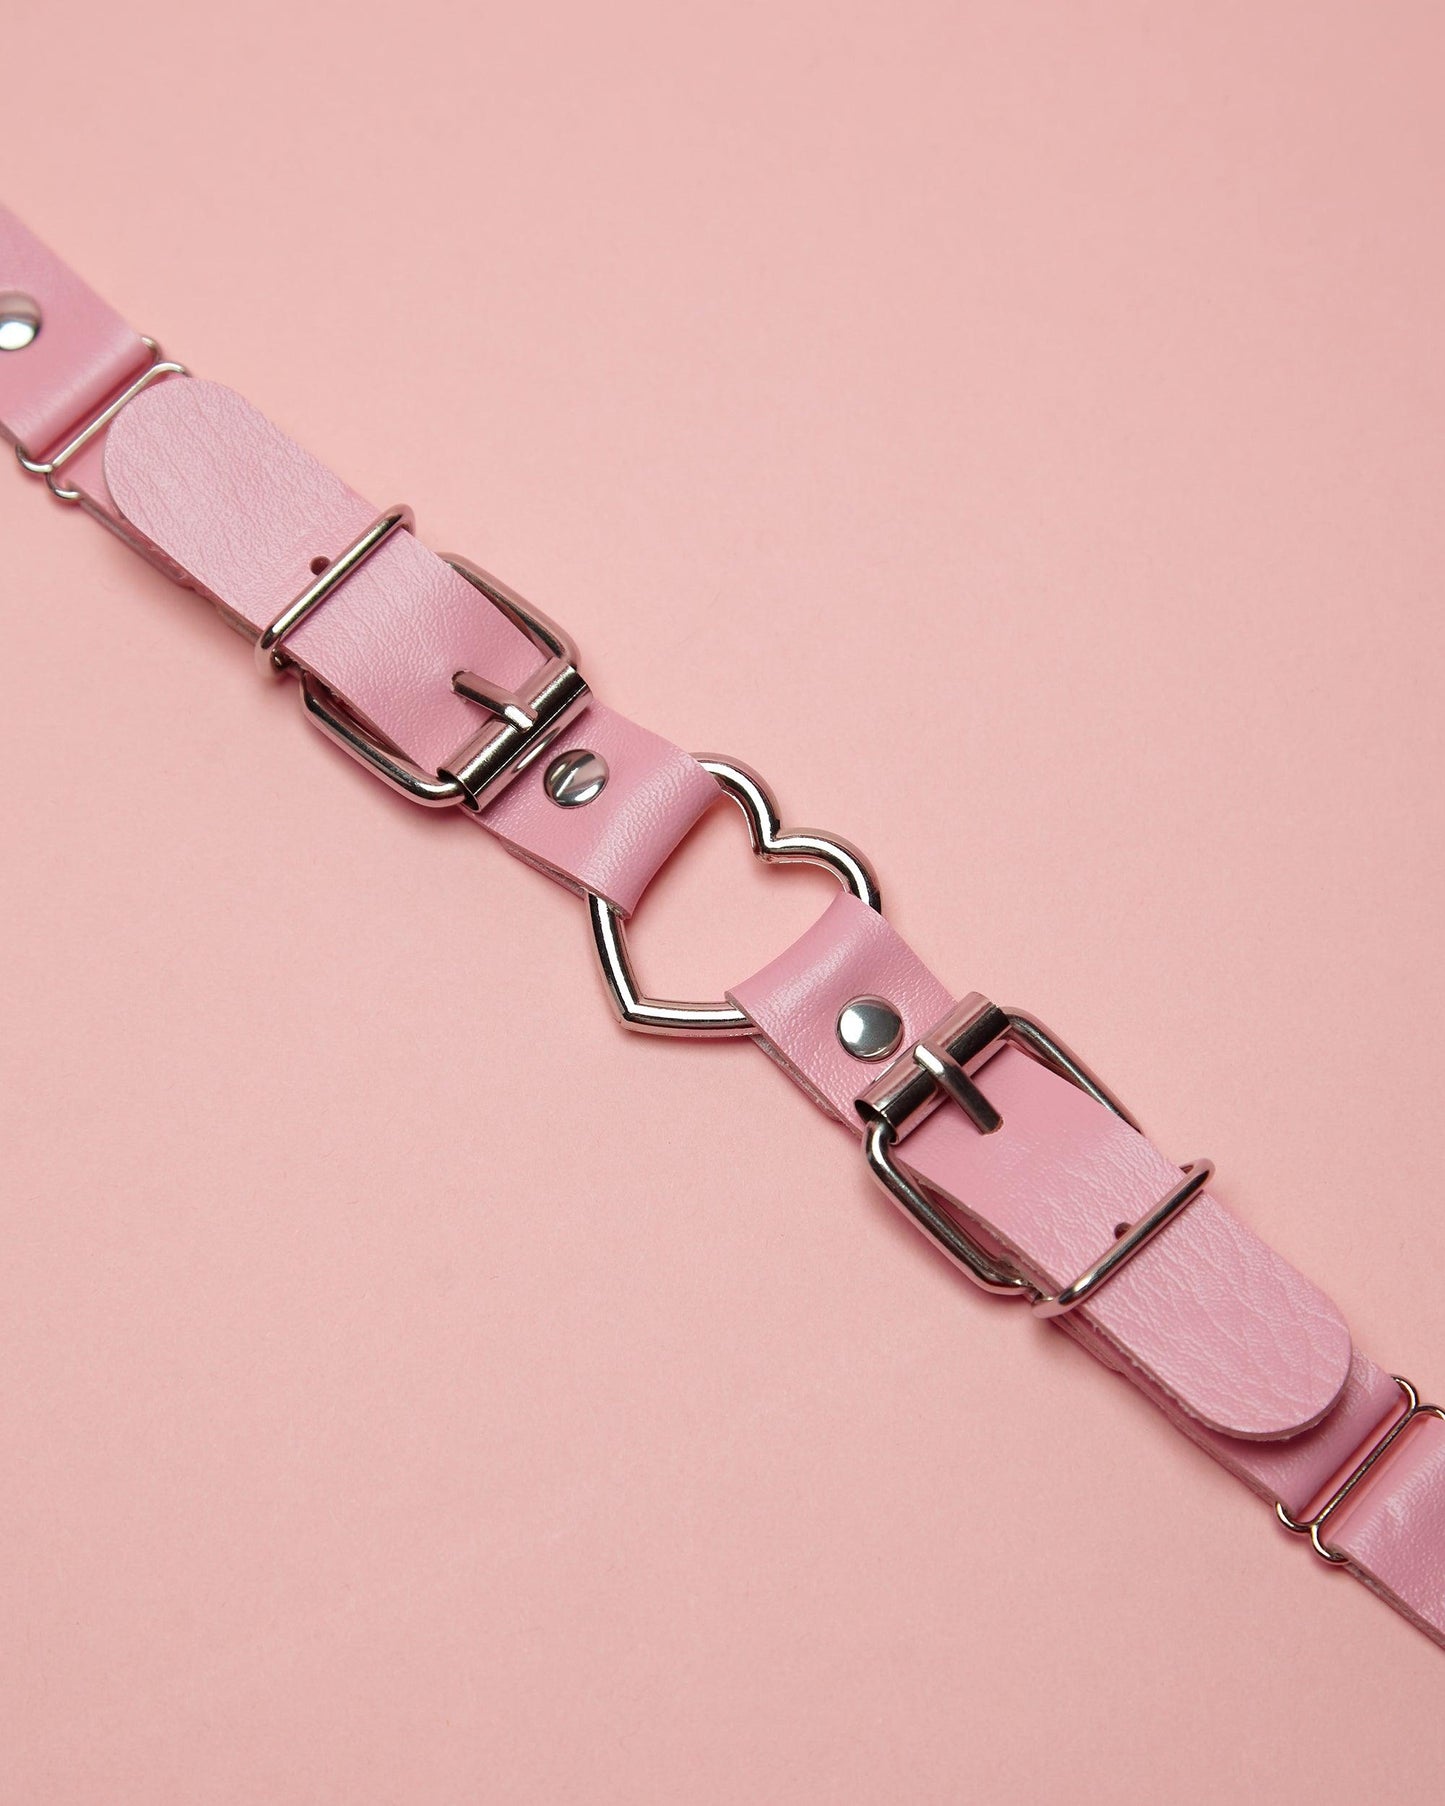 💕 Pink love heart, anime inspired choker/collar 💕